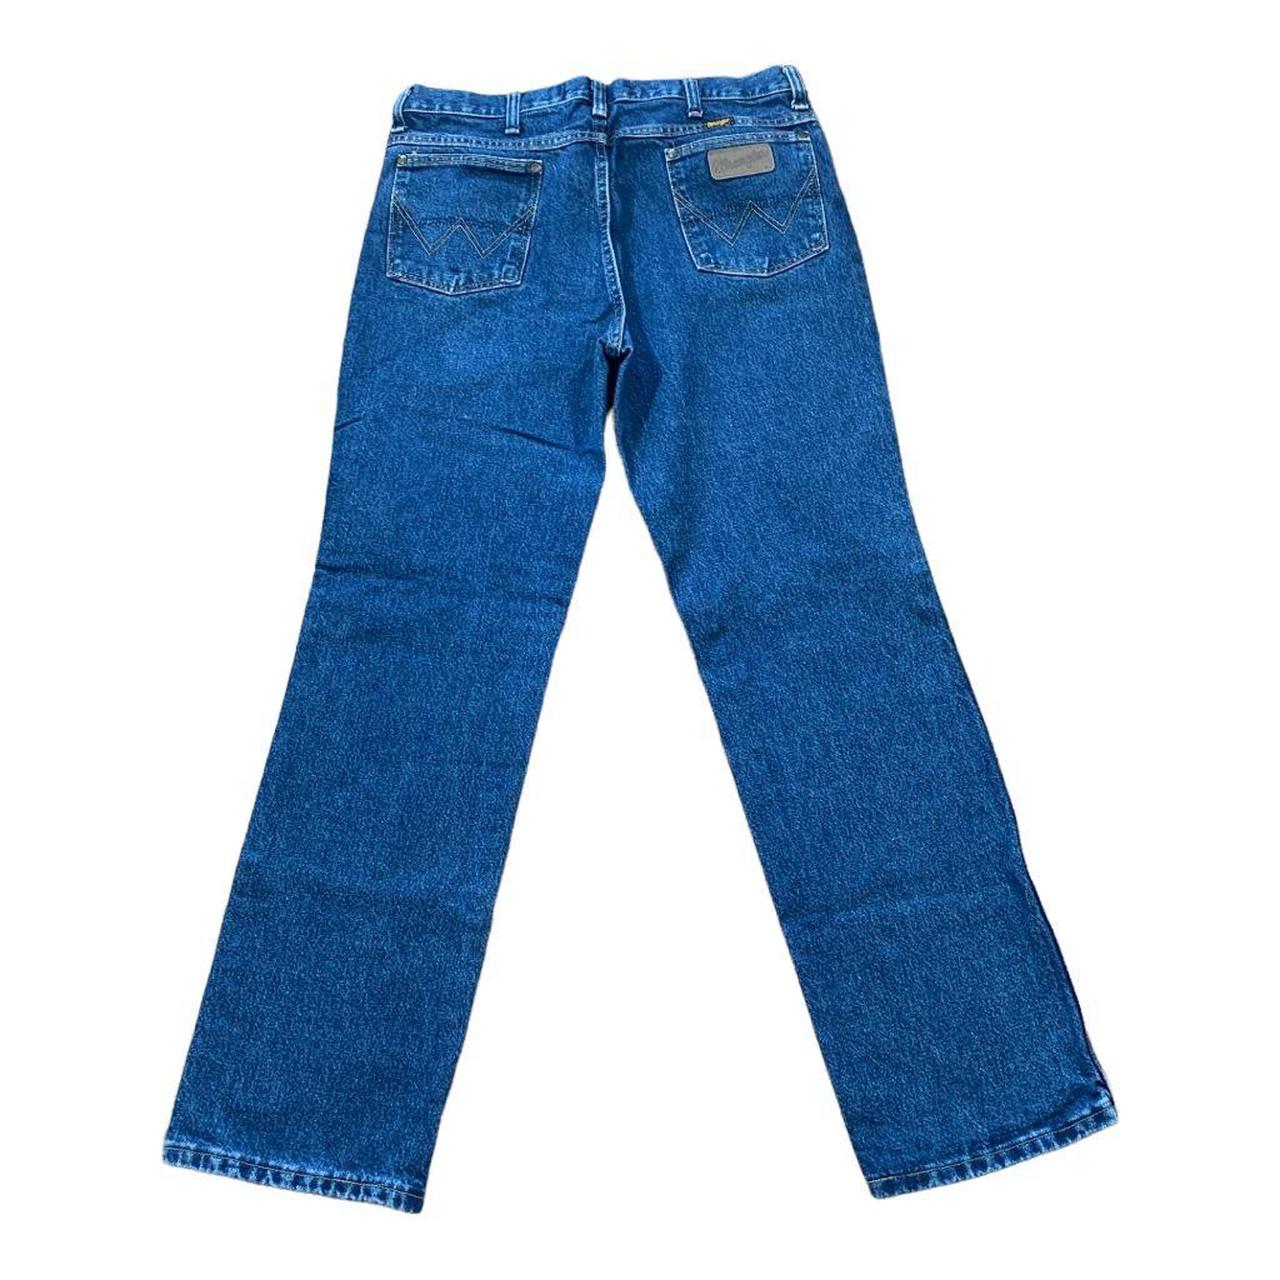 Product Image 2 - 90s Wrangler Jeans Vintage Size